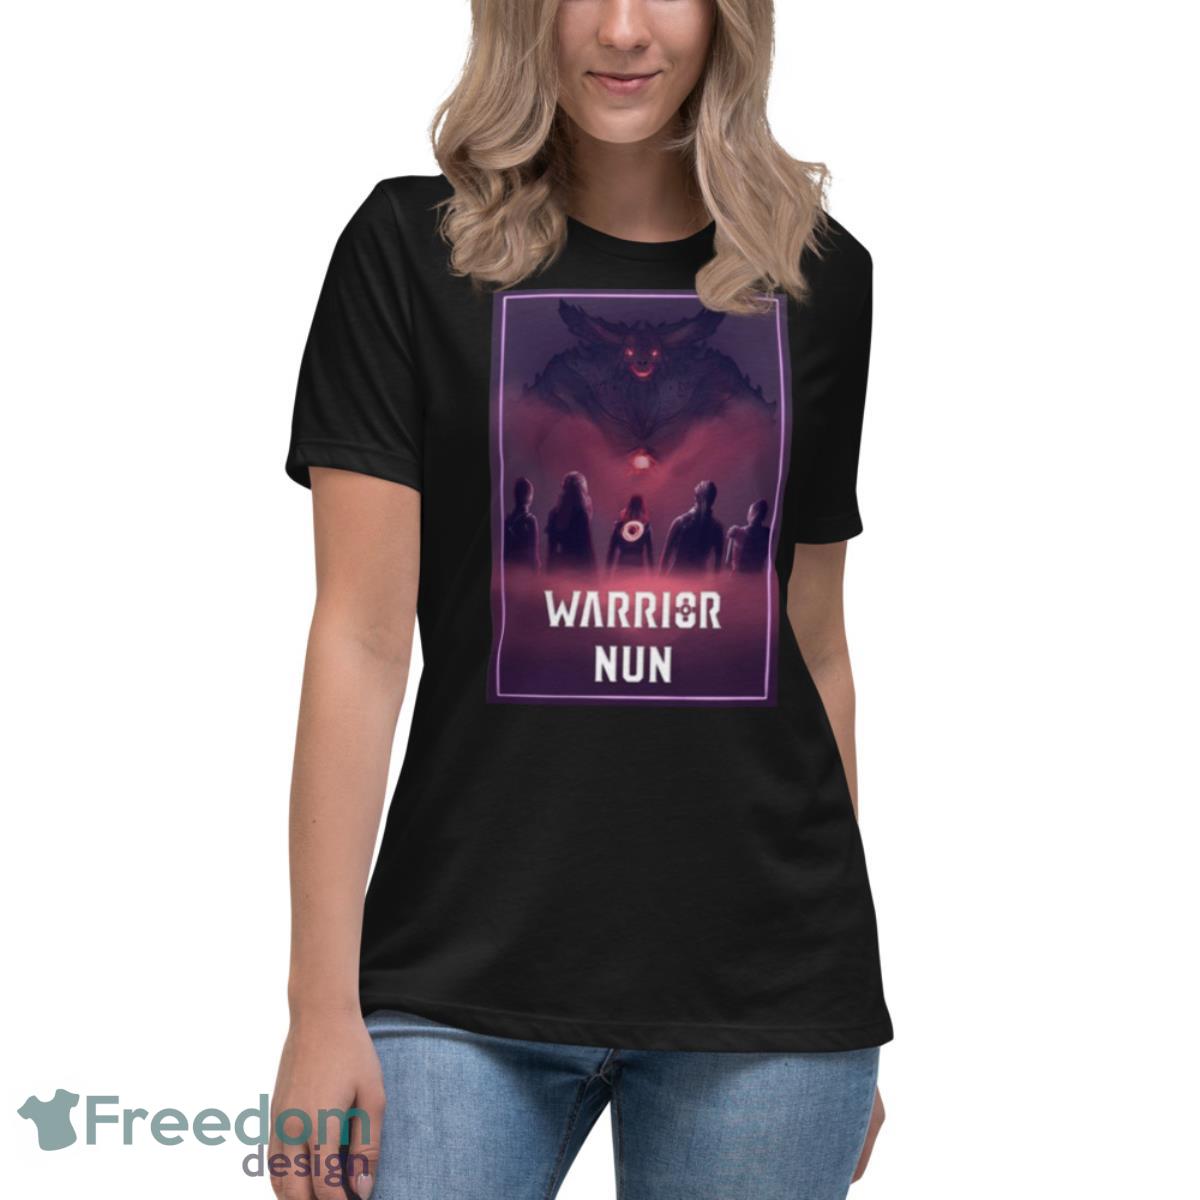 Drama Series The Warrior Nun American Fantasy Tv Show Poster Graphic shirt